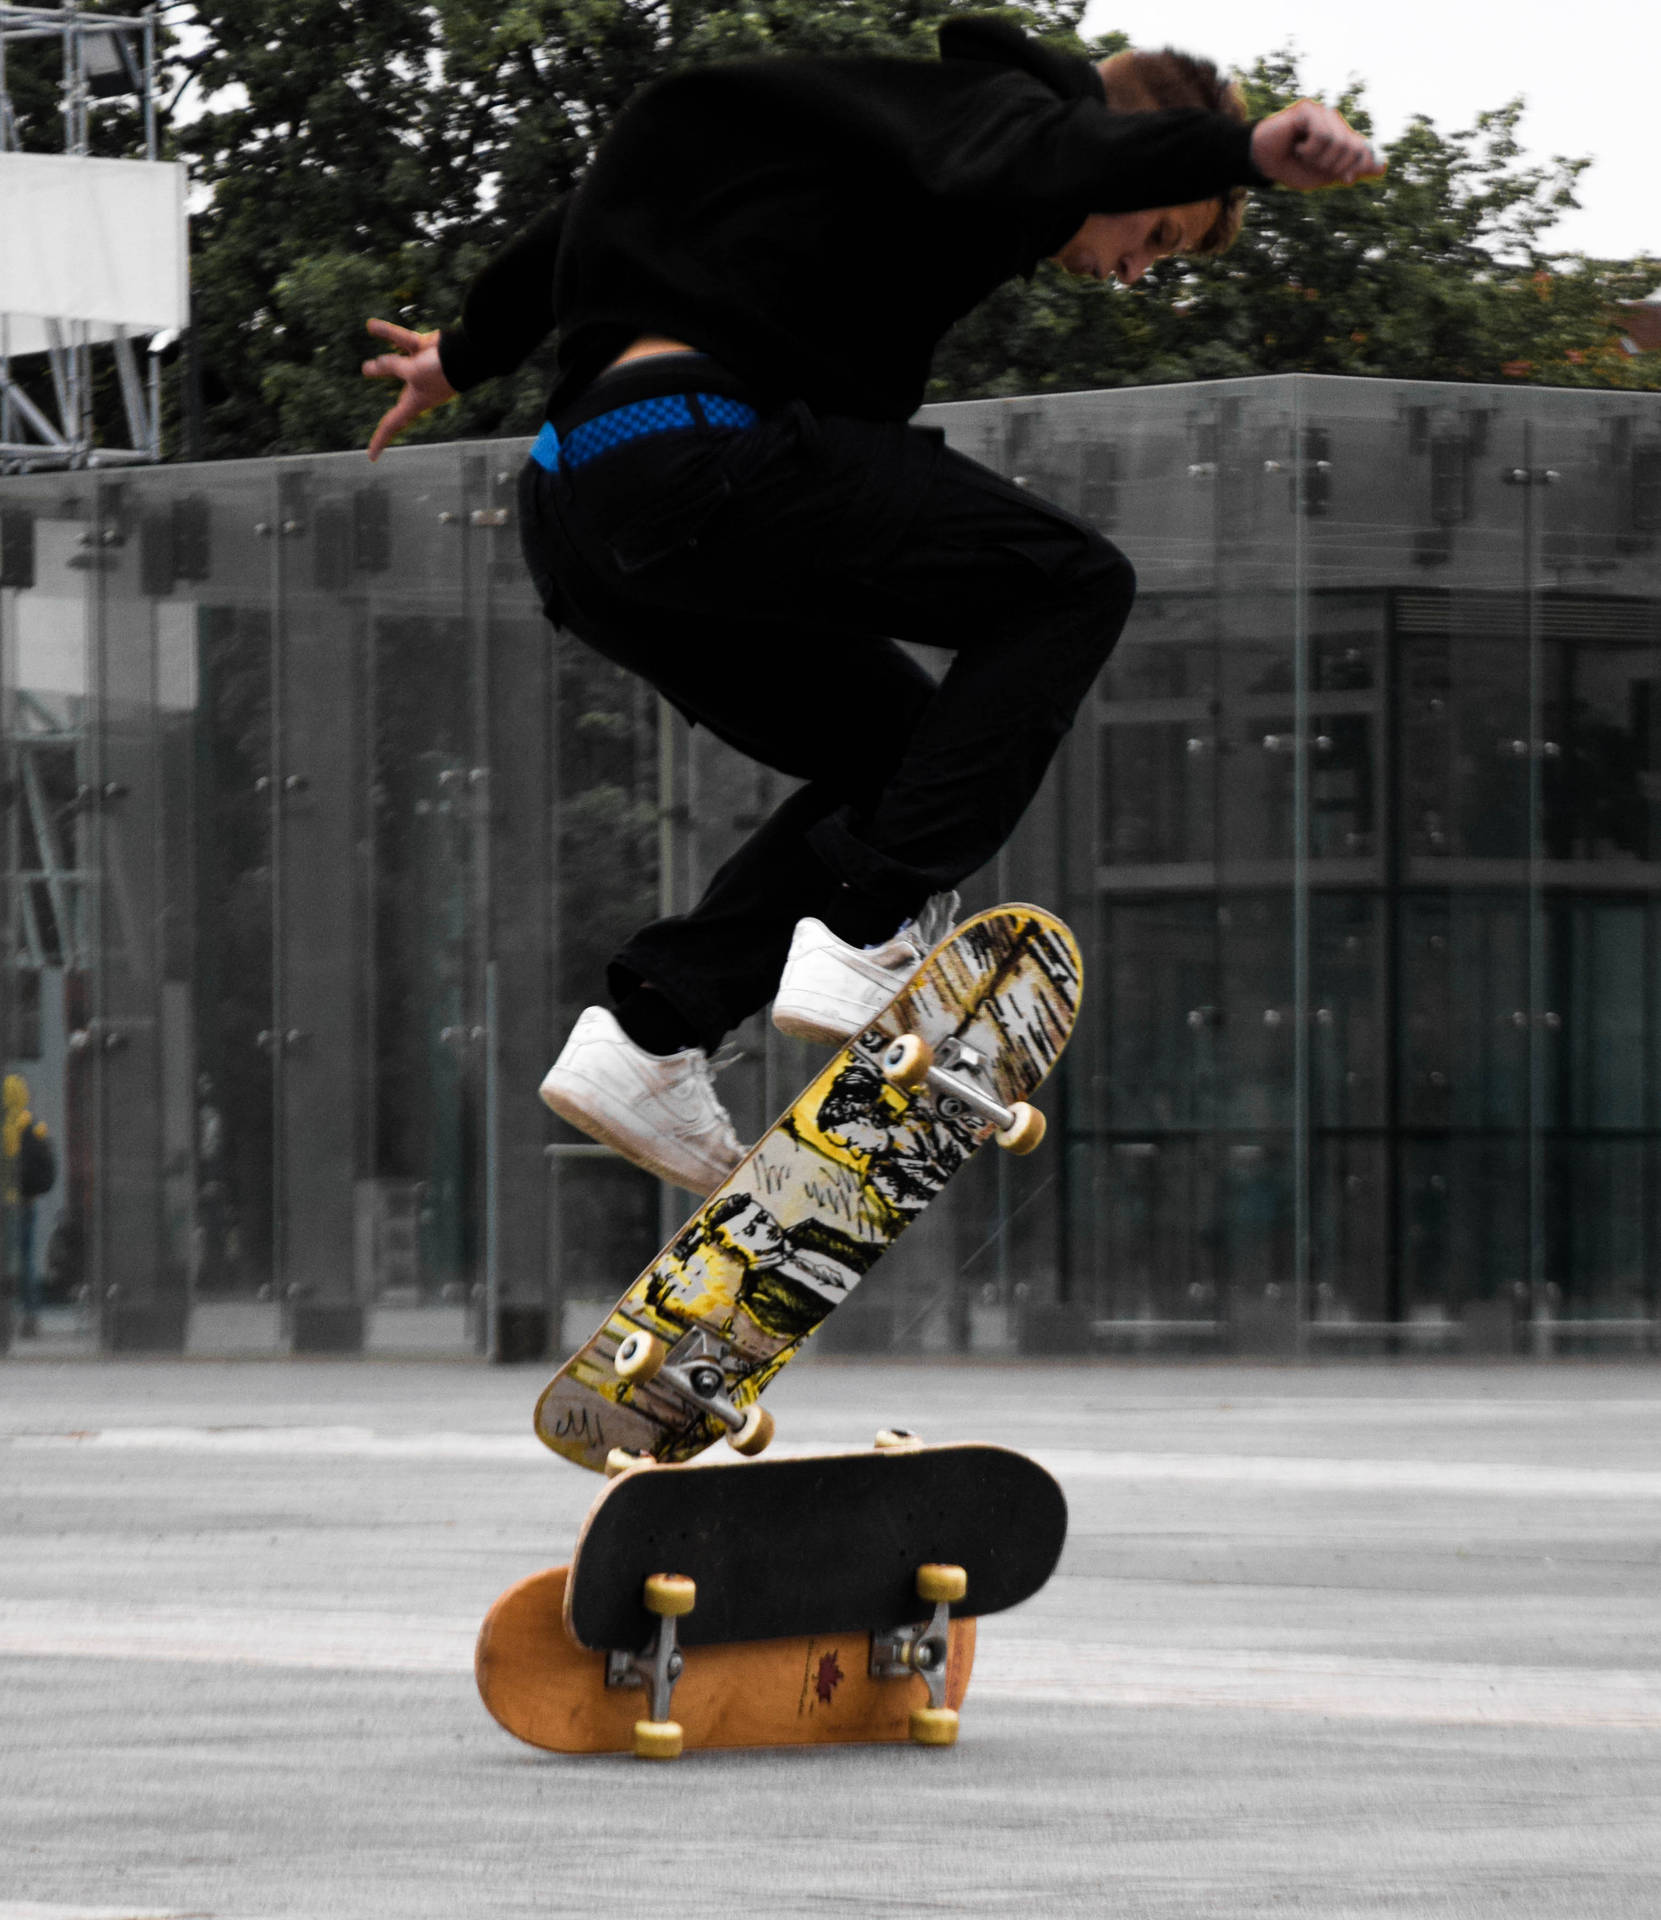 Ollie Trick On Skateboard